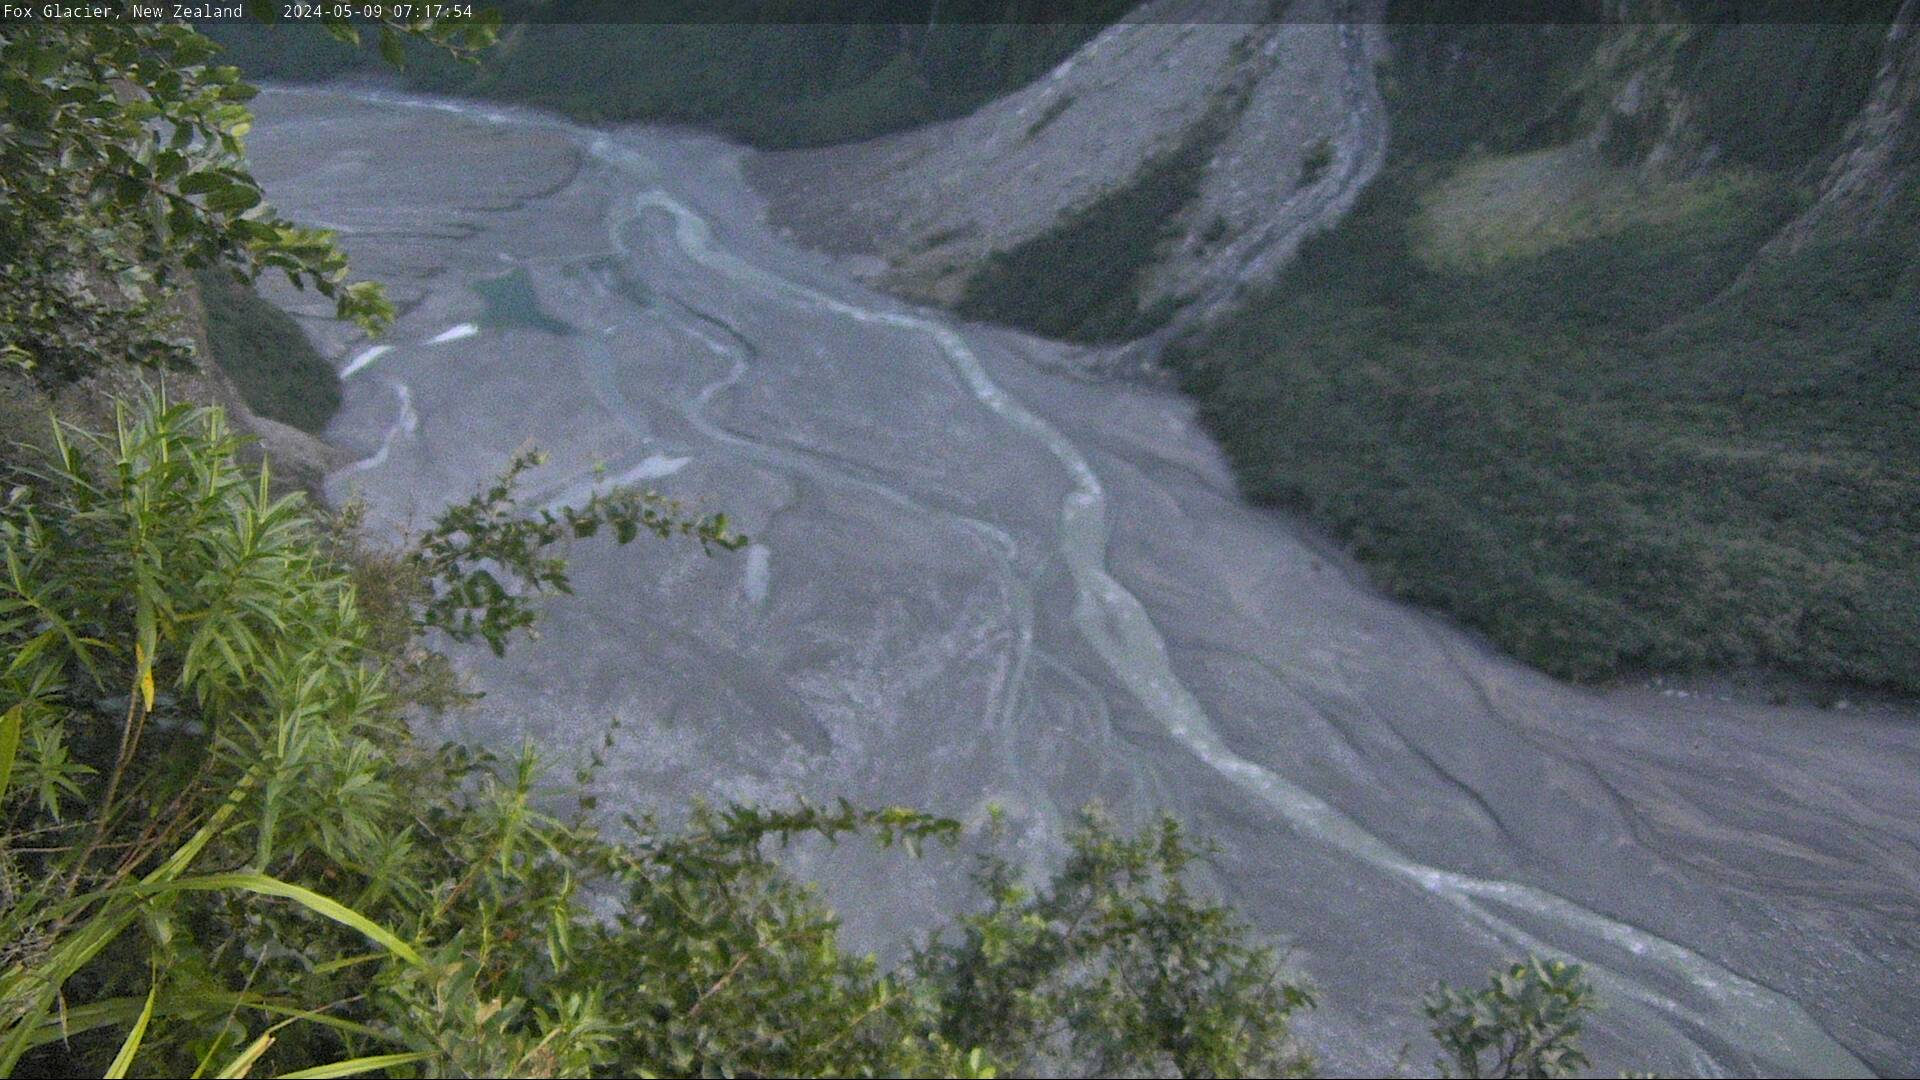 Latest image from Fox Glacier web cam